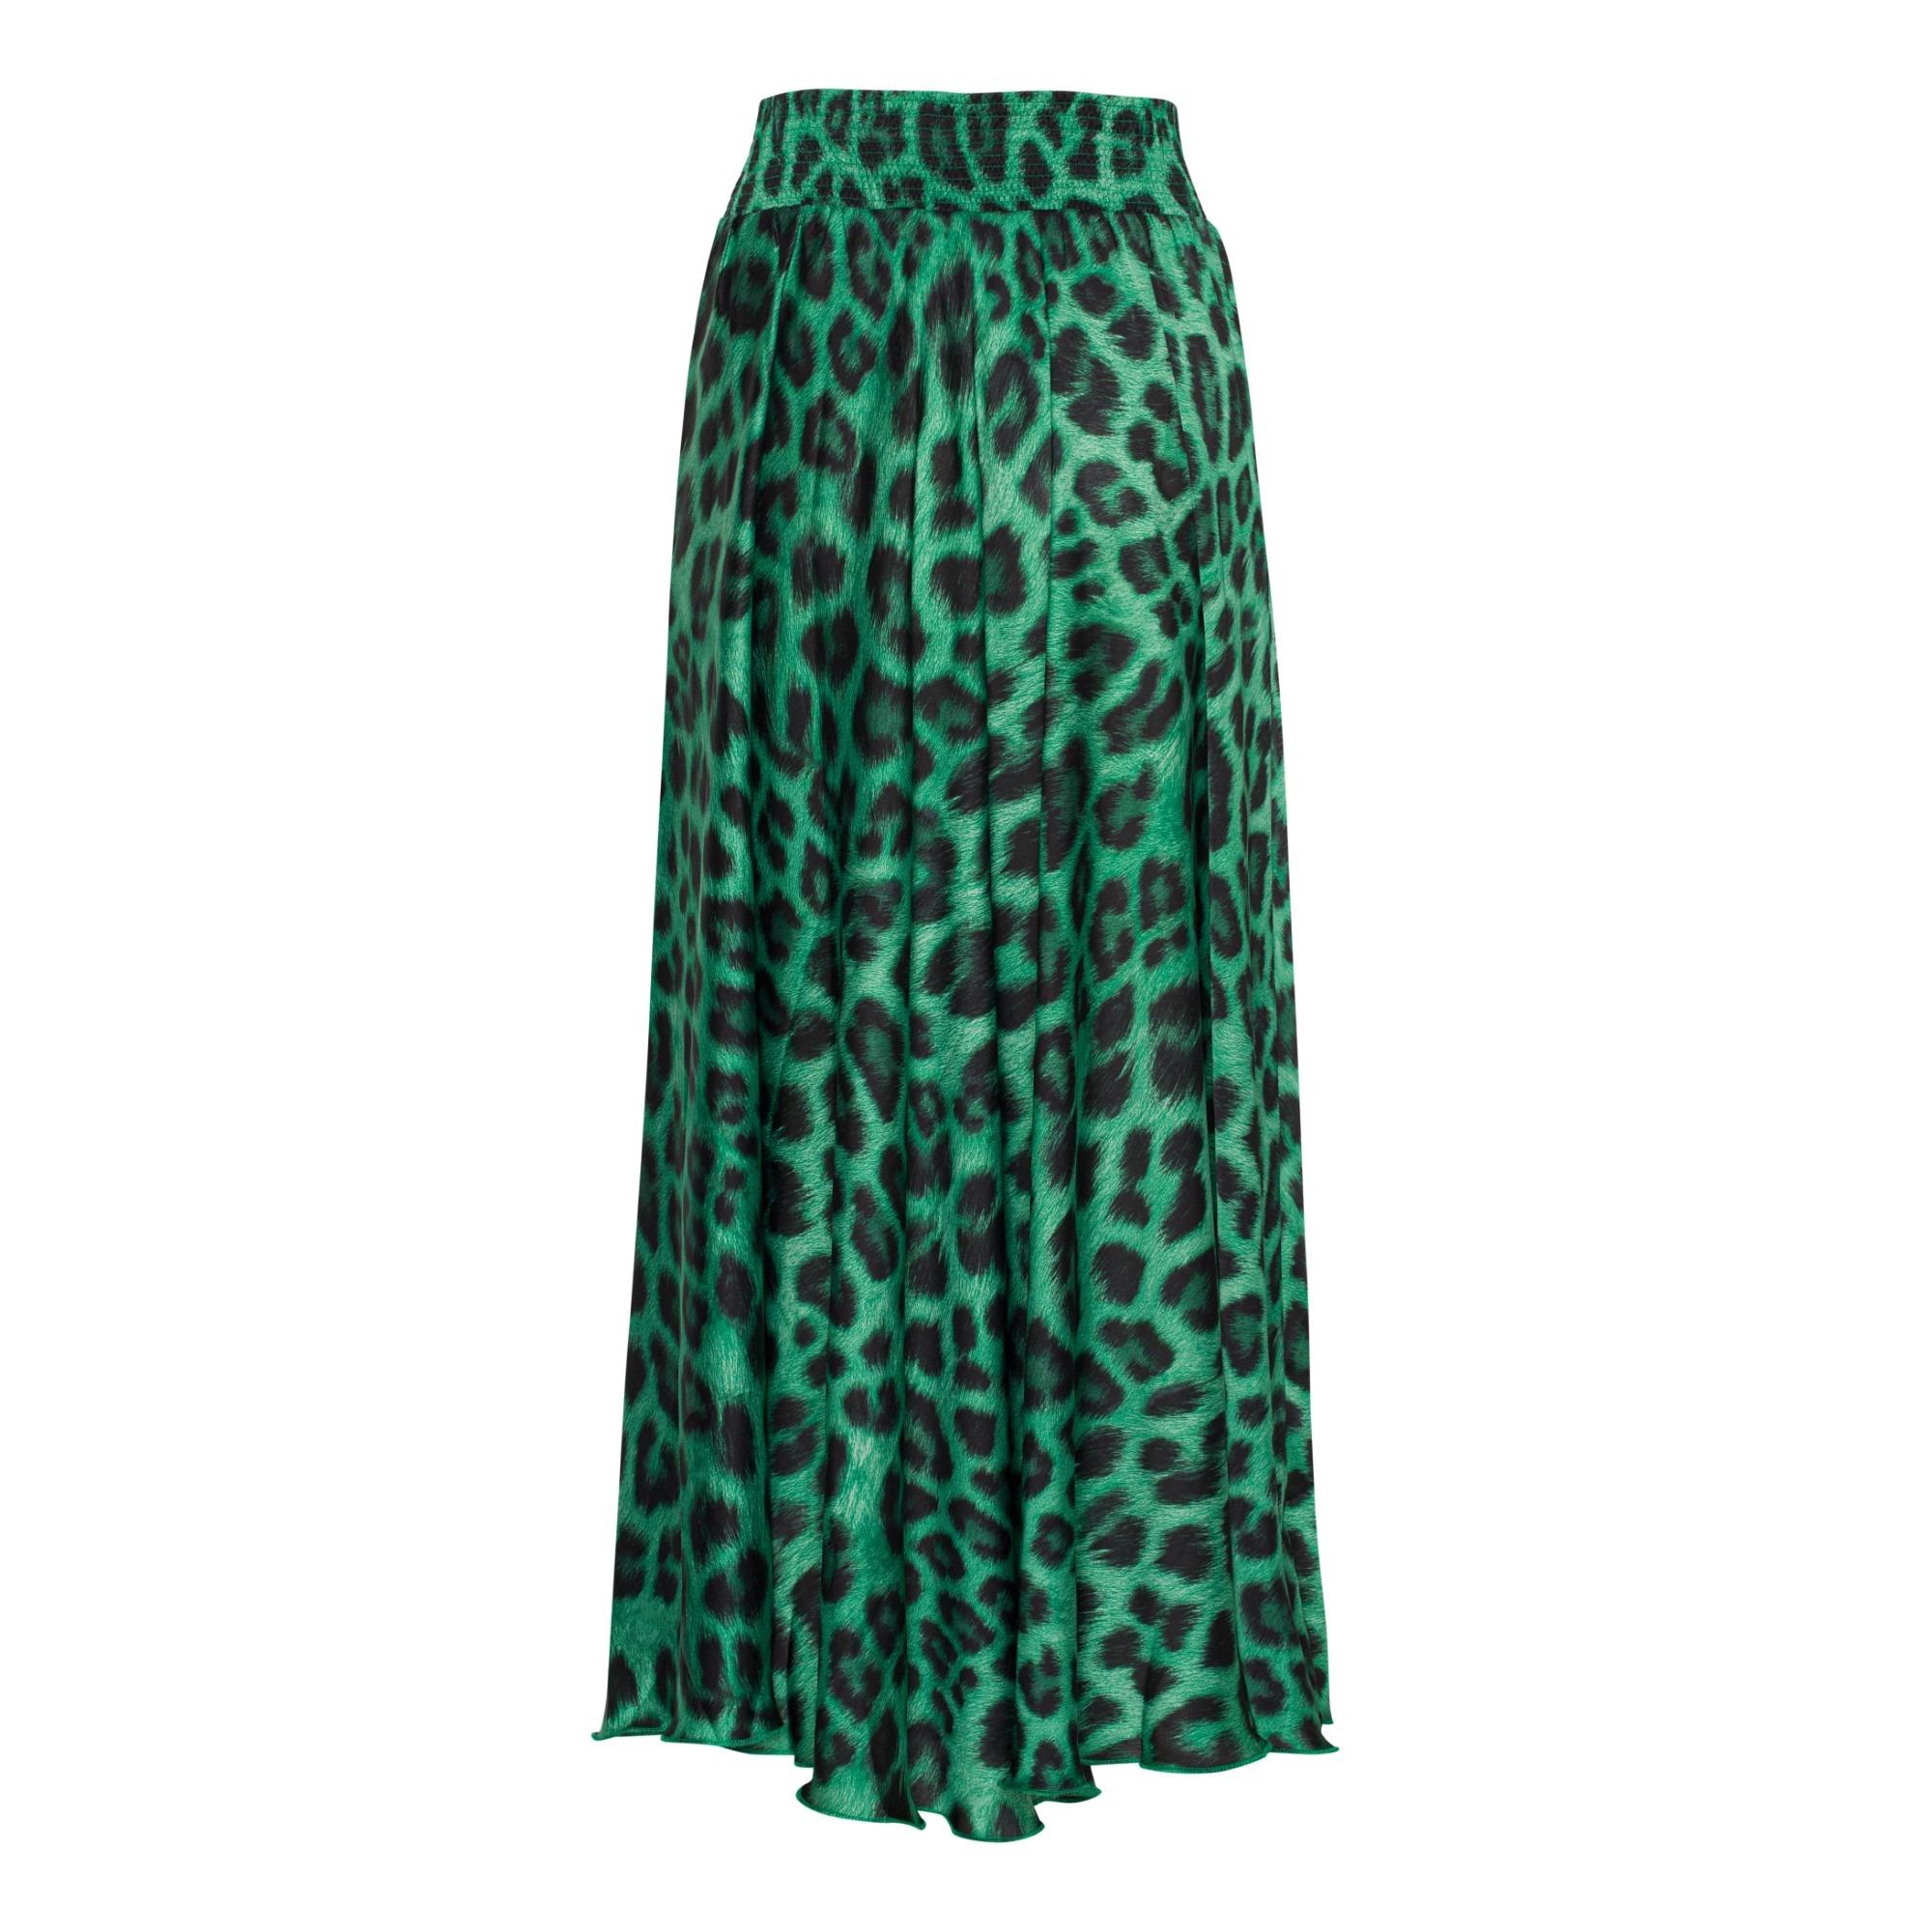 Savannah Skirt – Emerald Leo